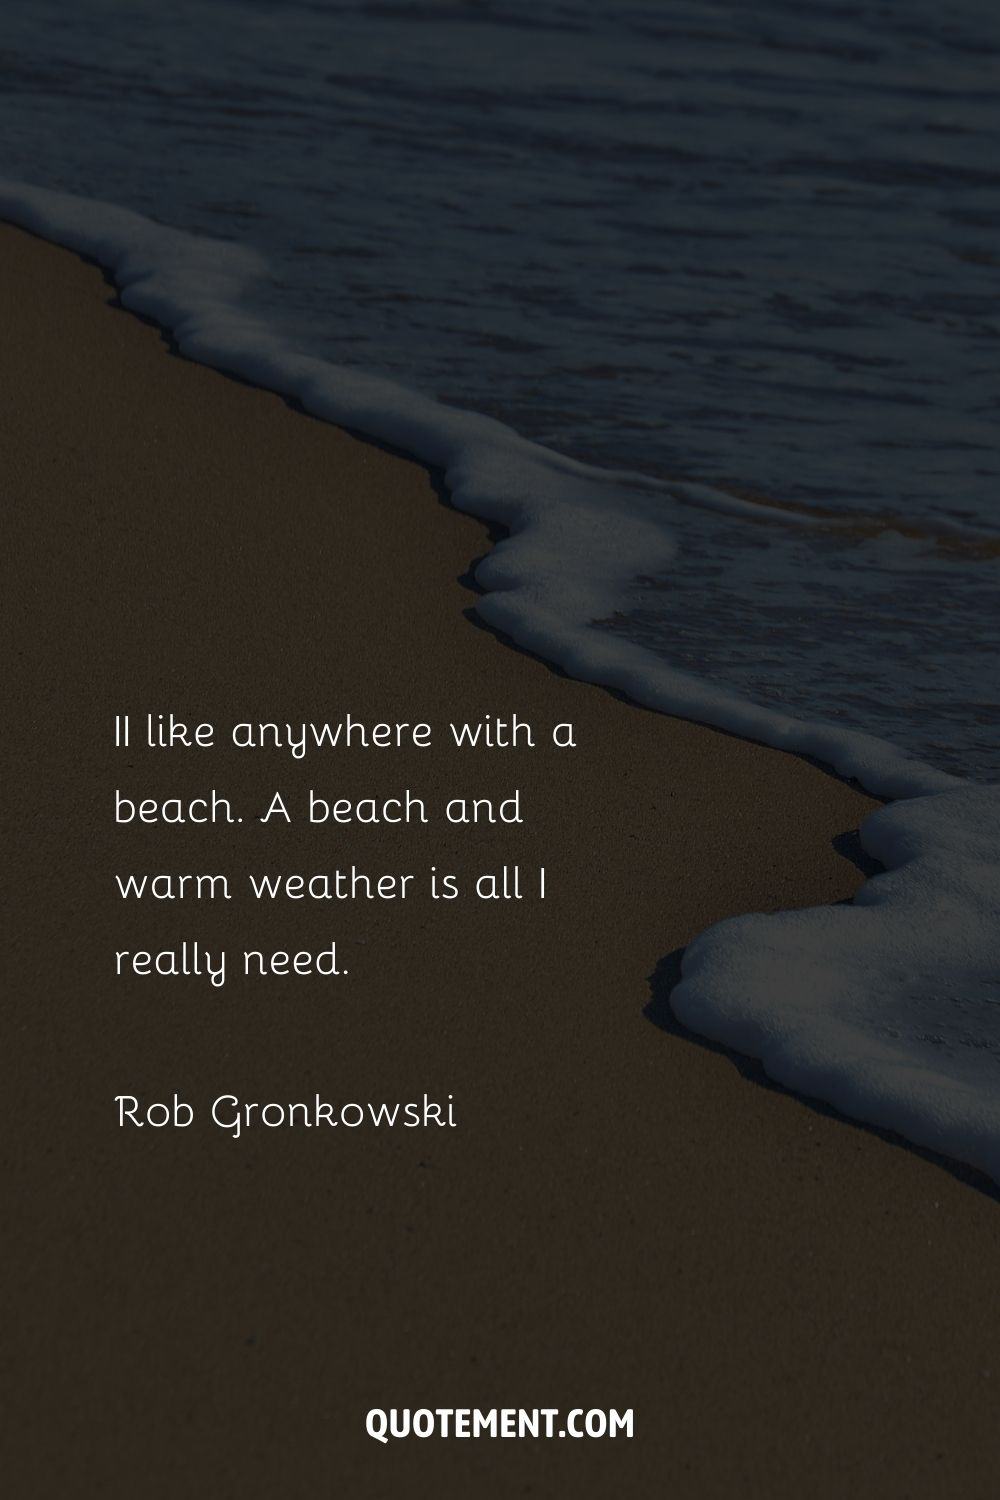 I like anywhere with a beach. A beach and warm weather is all I really need. – Rob Gronkowski